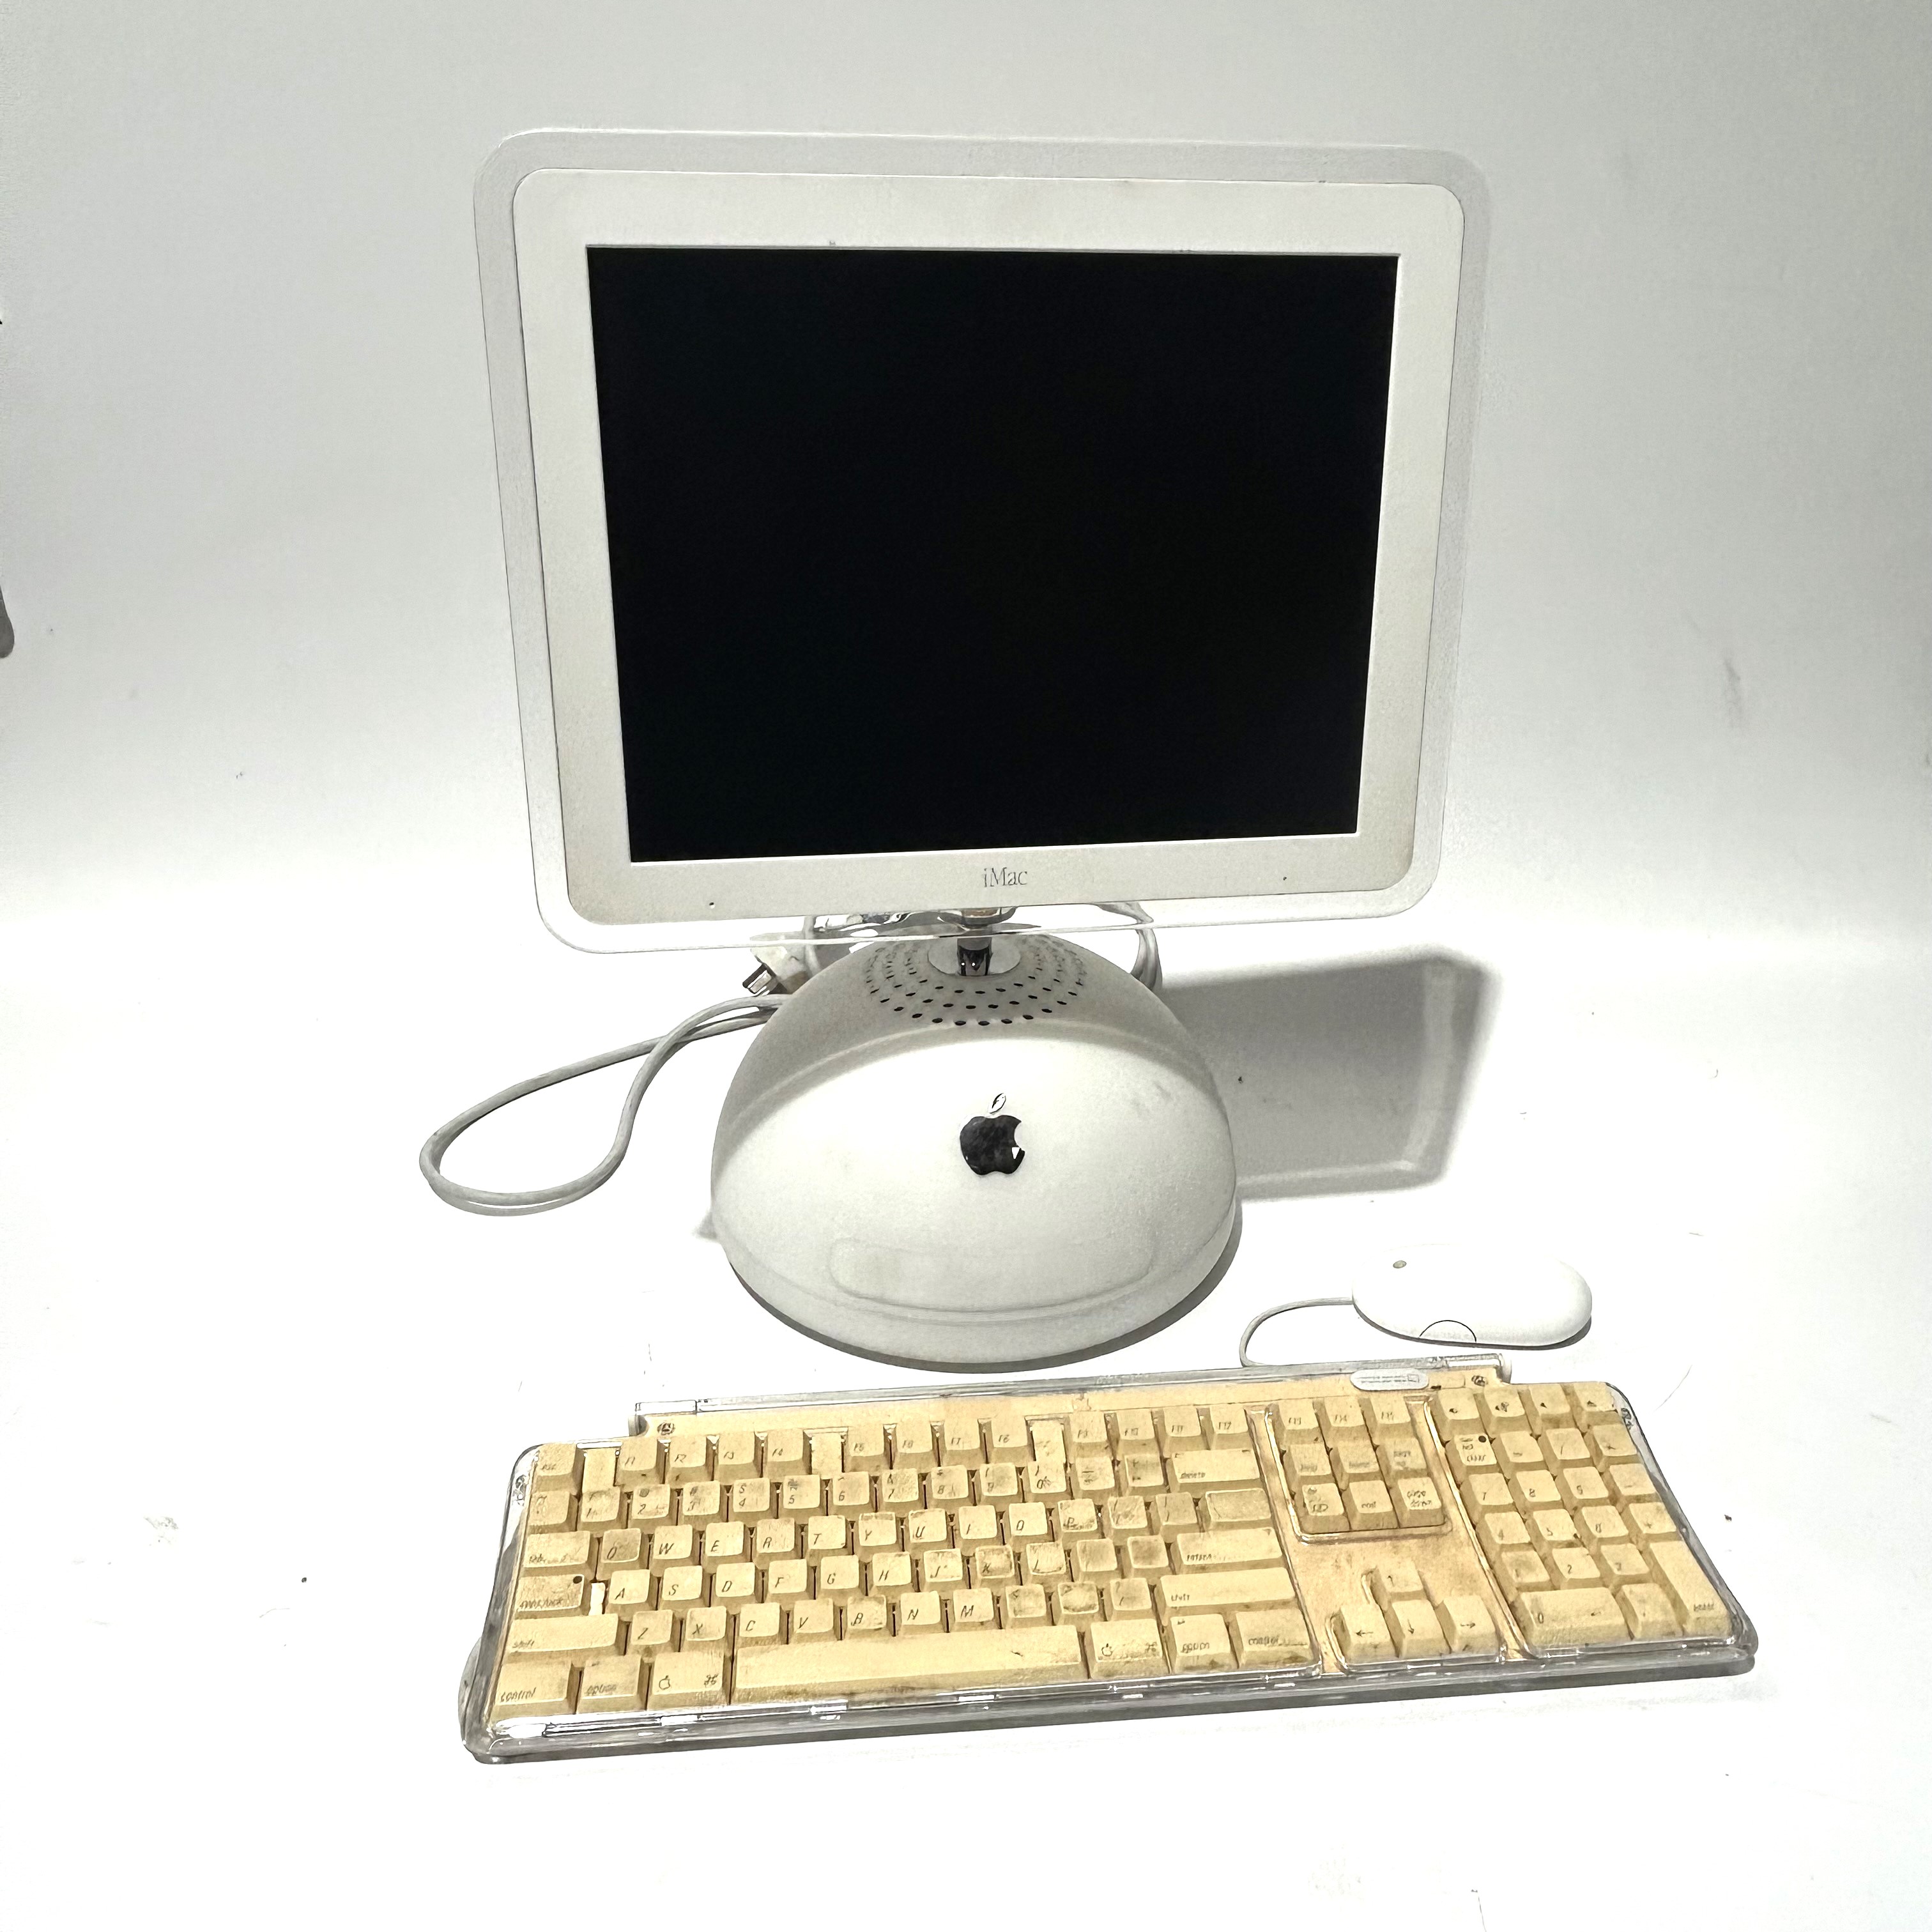 COMPUTER, IMAC G4 w Mouse & Keyboard